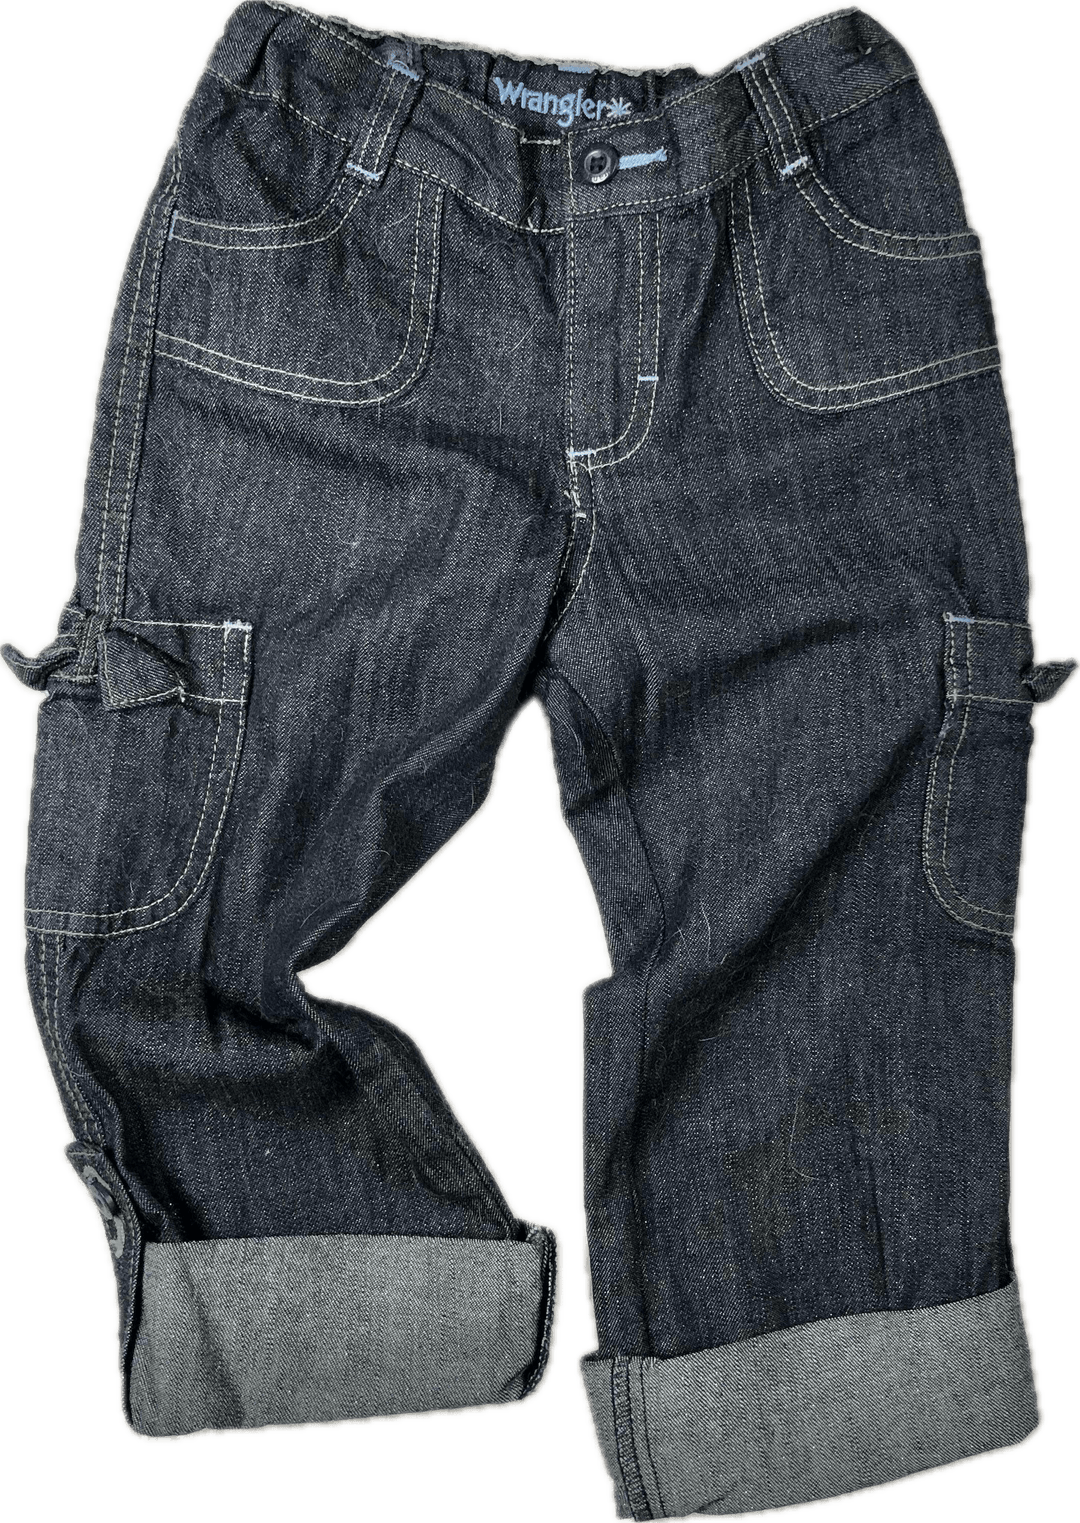 Wrangler Girls Metallic Fleck Sparkle Convertible Jeans - Size 5T - Jean Pool